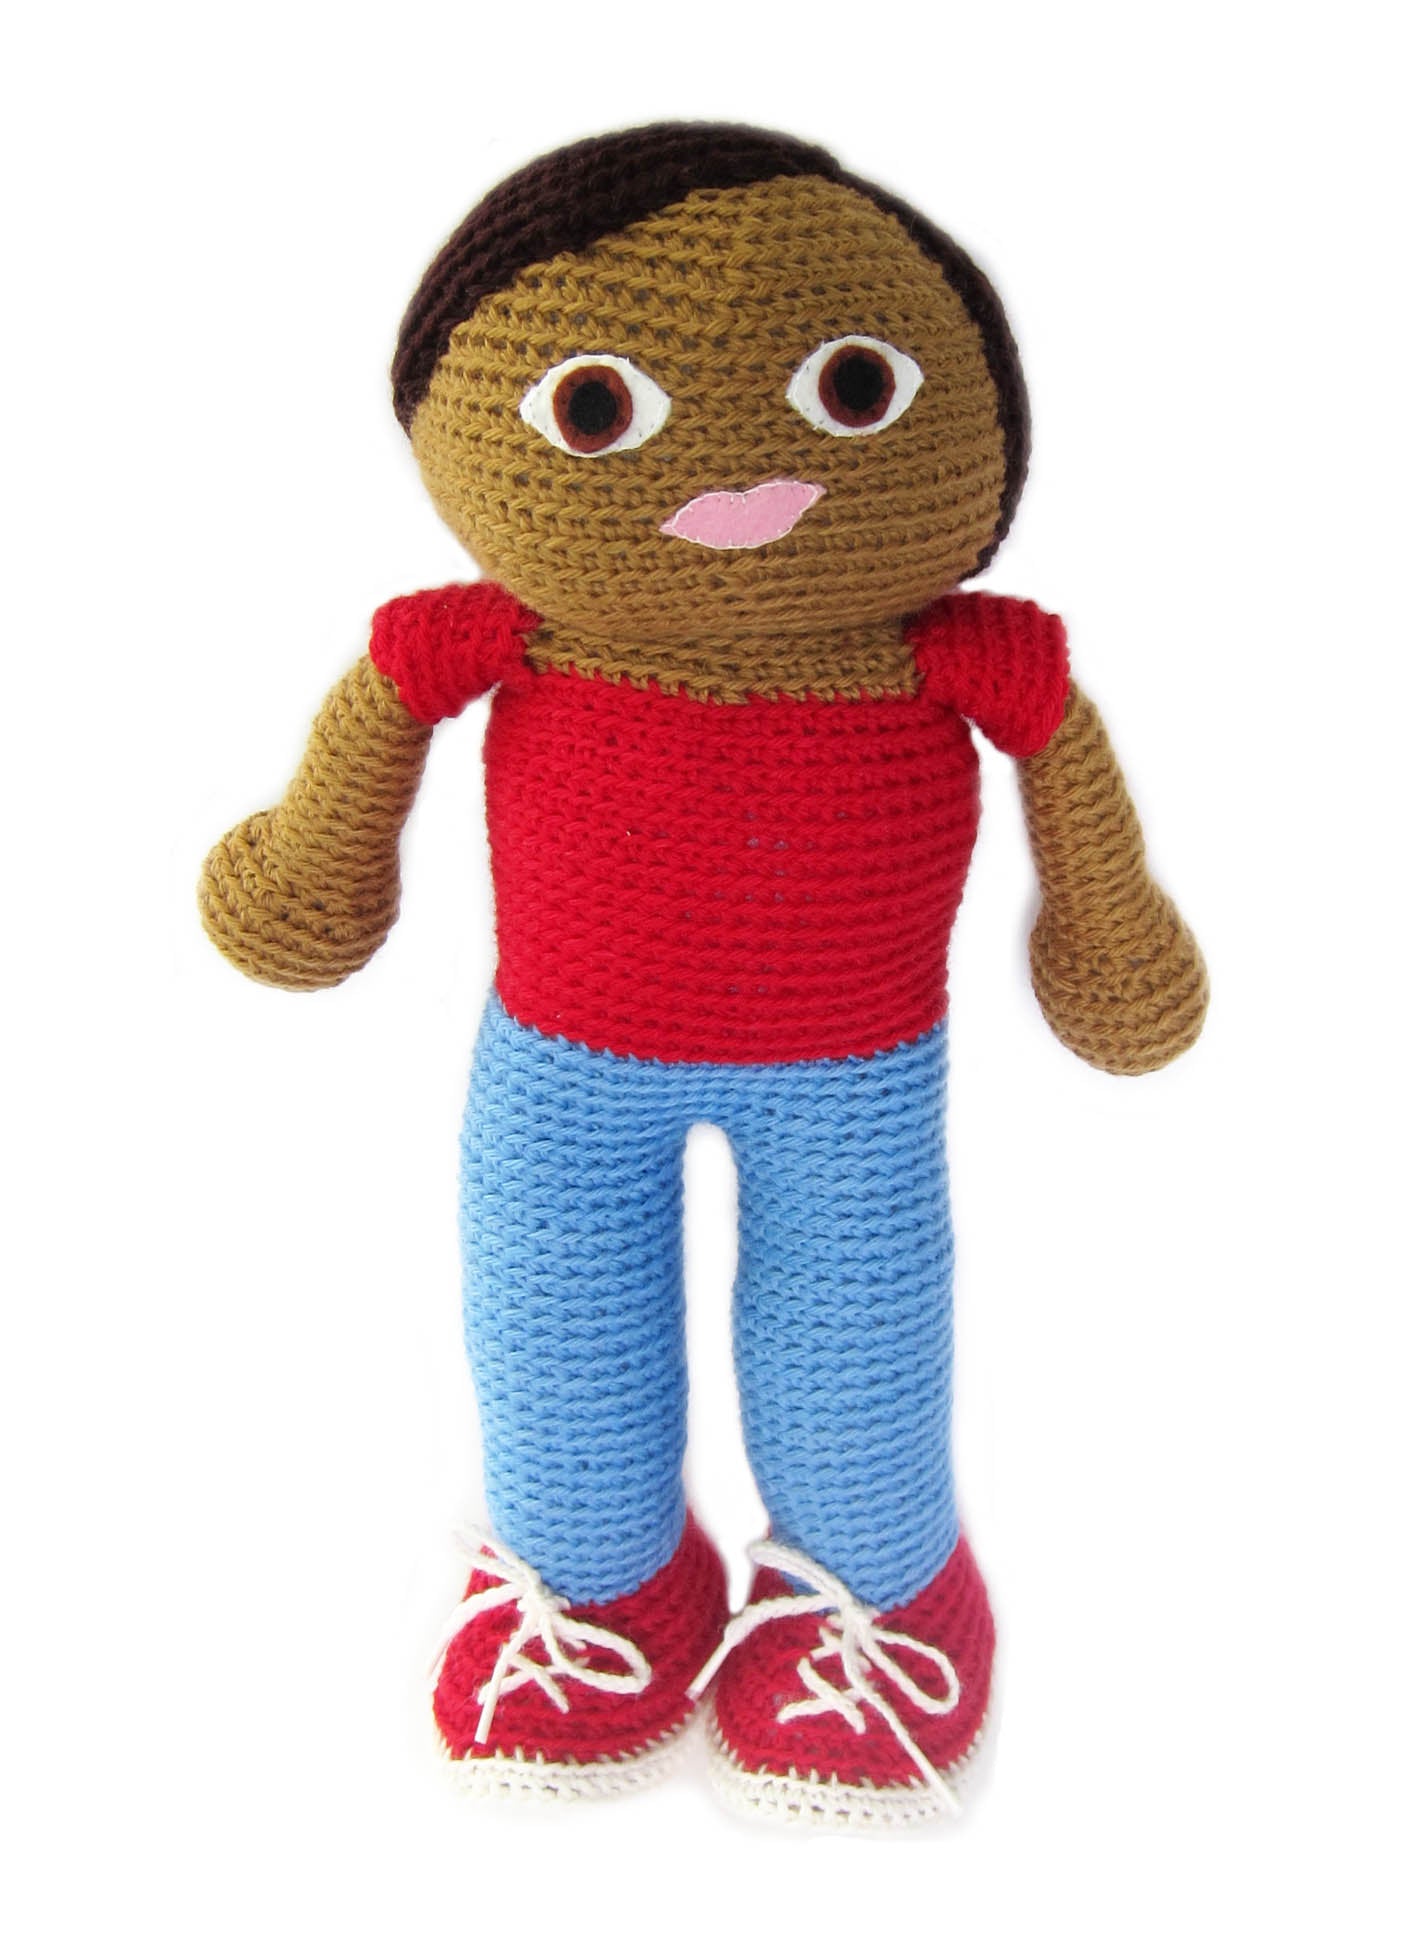 A Doll Like Me - customizable crochet doll pattern